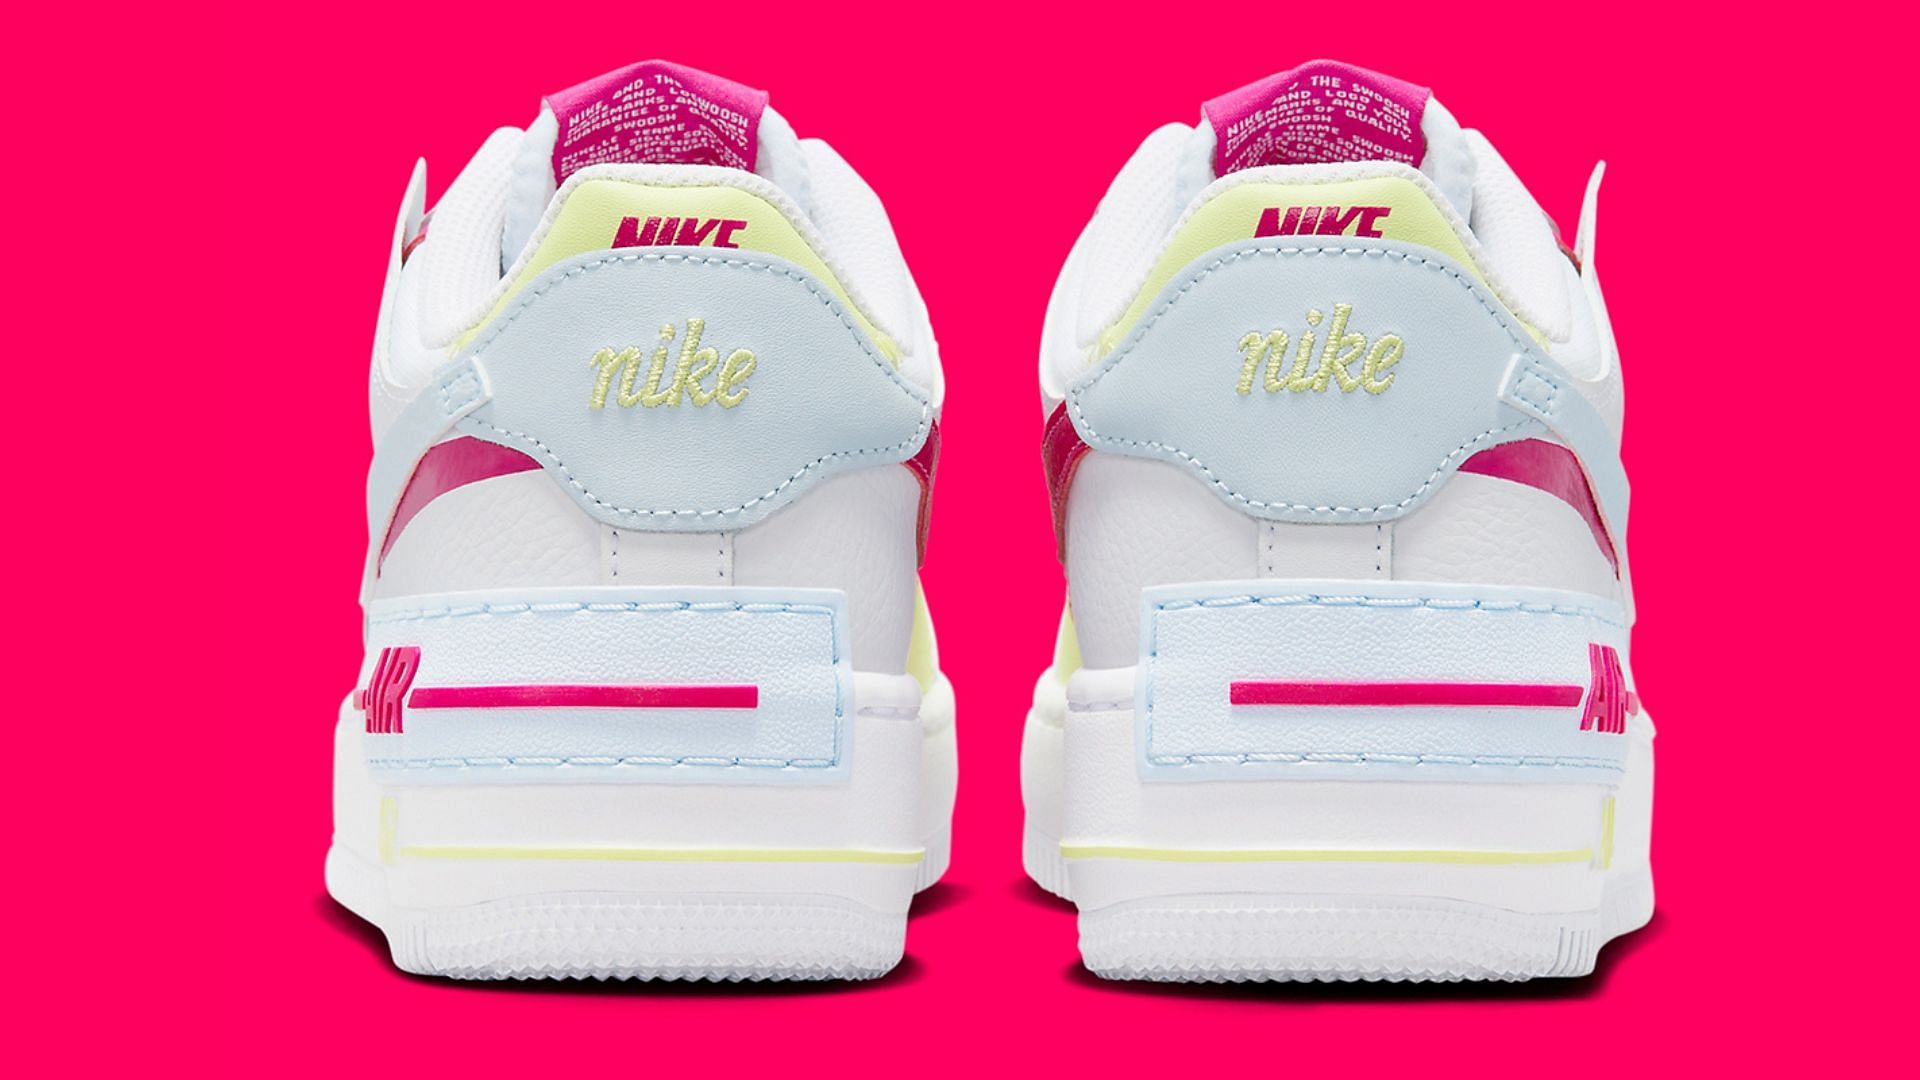 Take a closer look at the heels (Image via Nike)